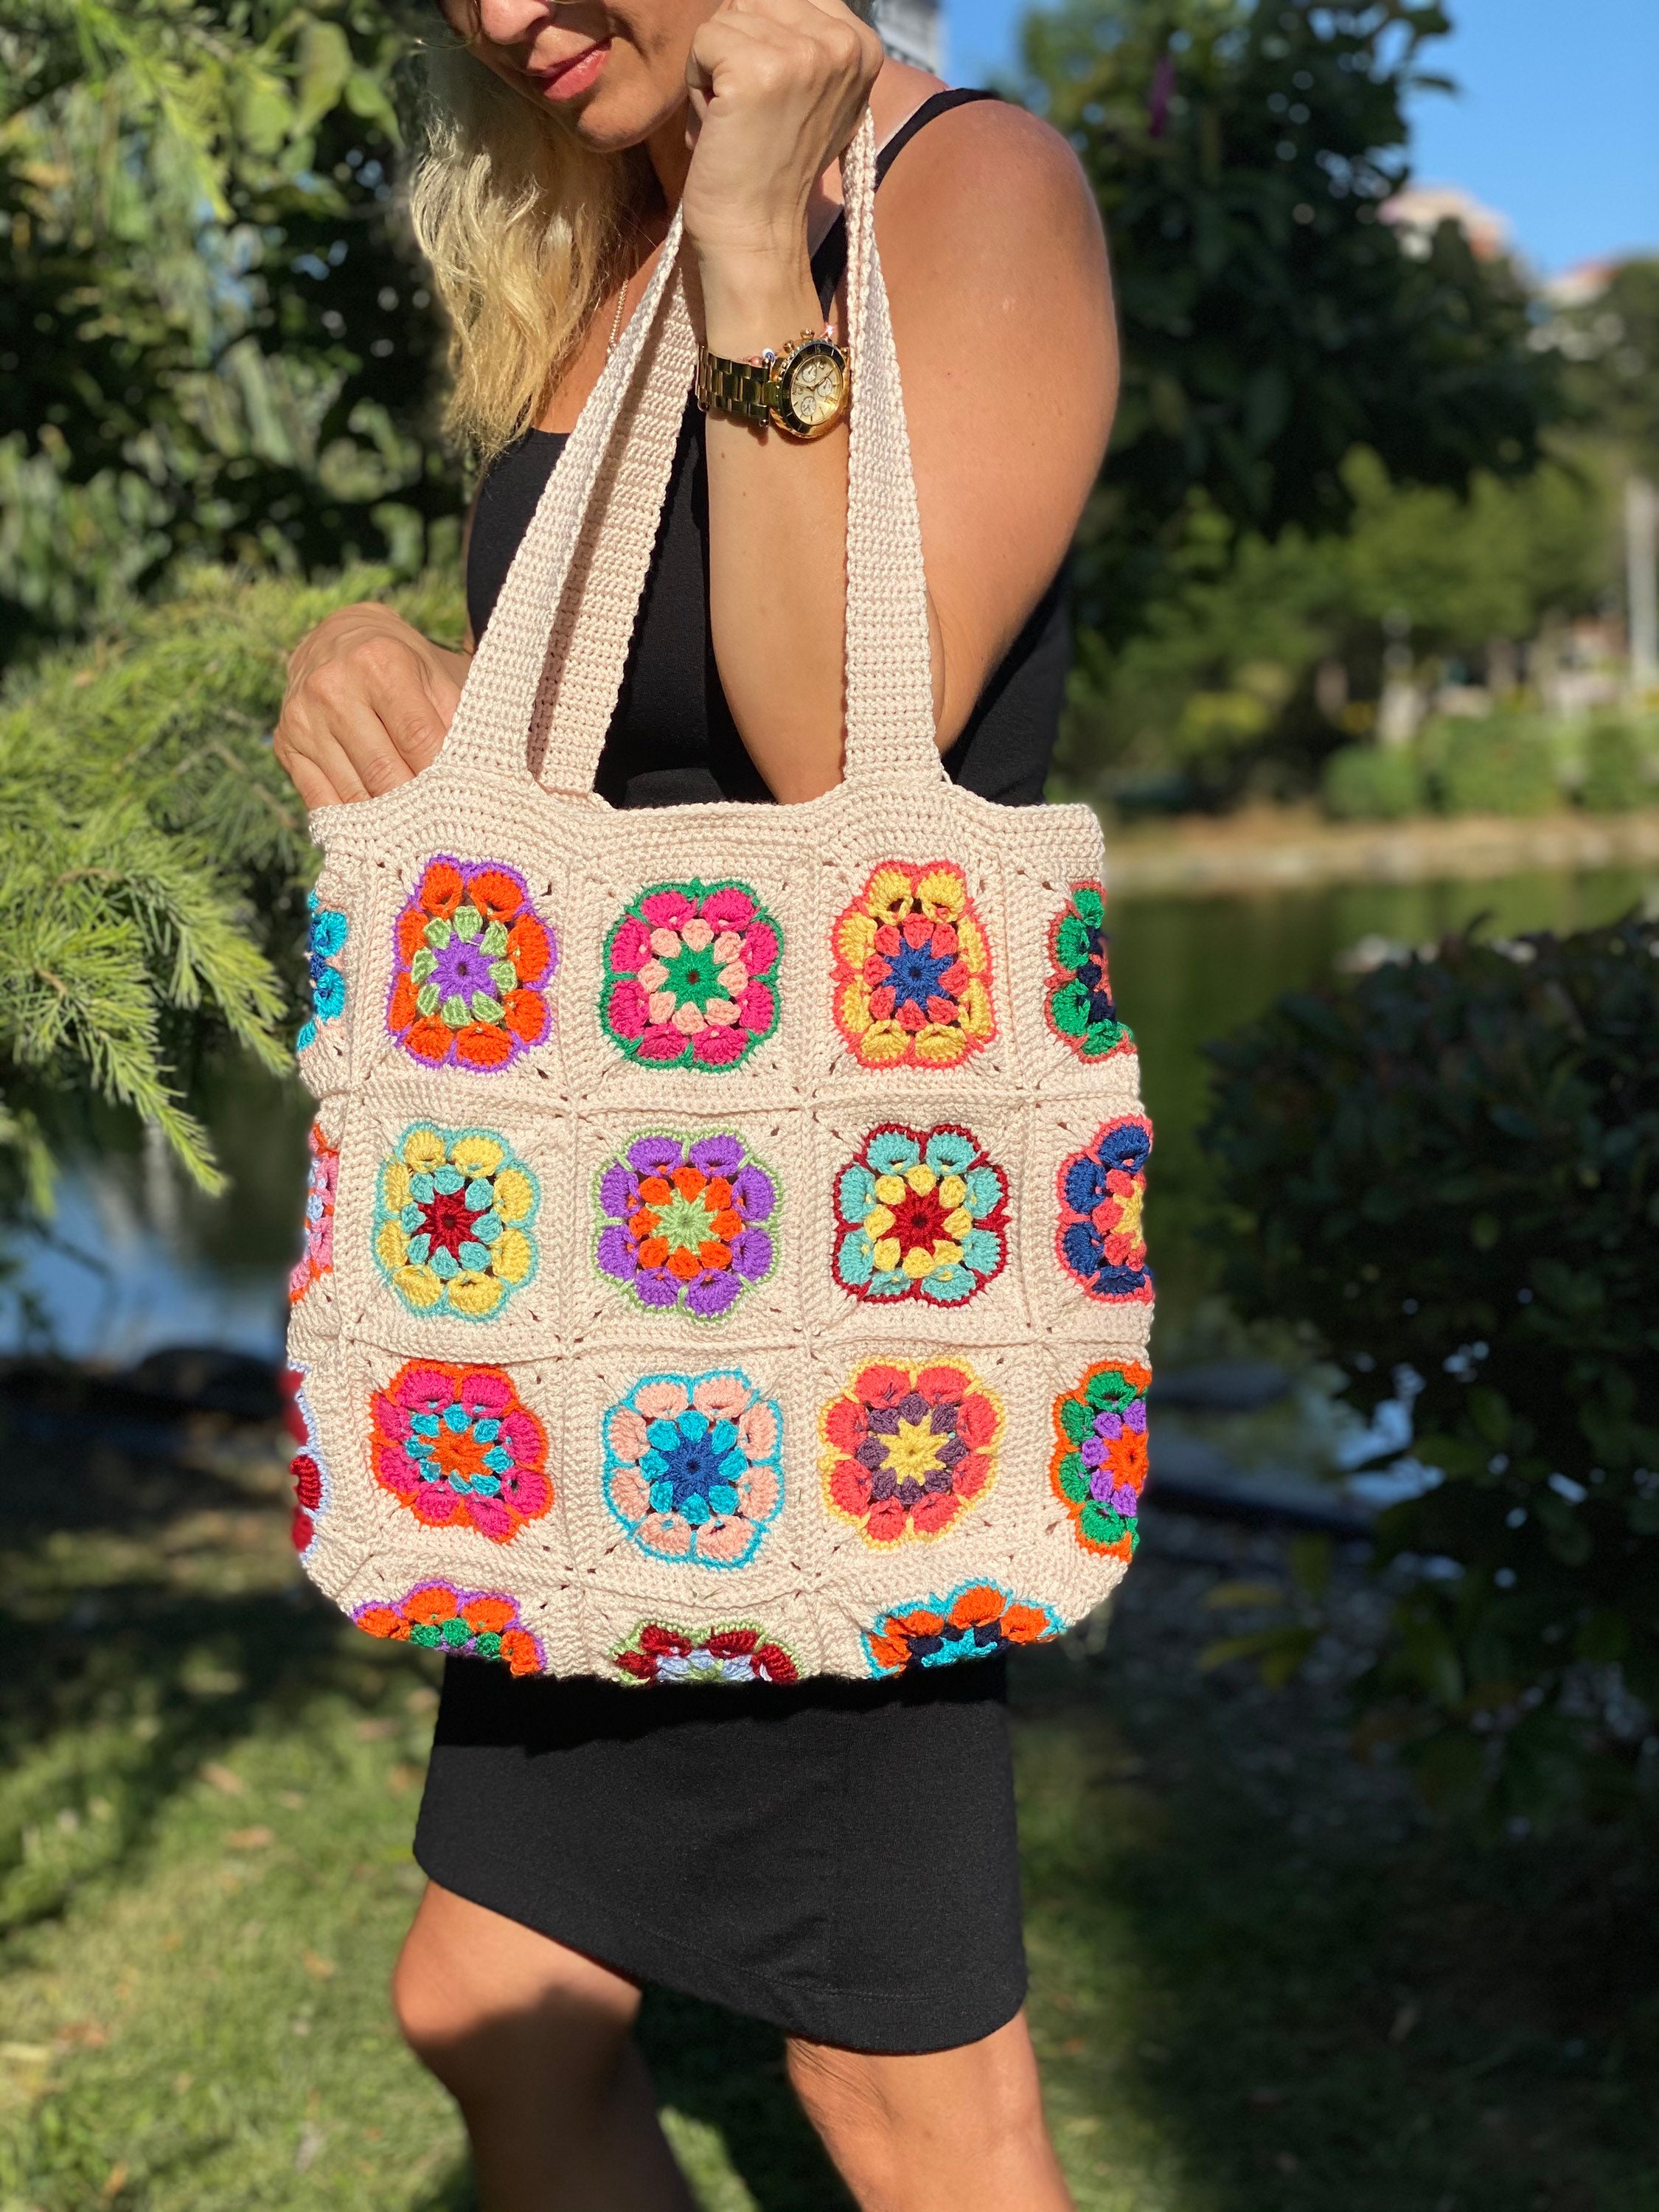 Crochet Bag Granny Square Afghan BagPride Bag Crochet | Etsy